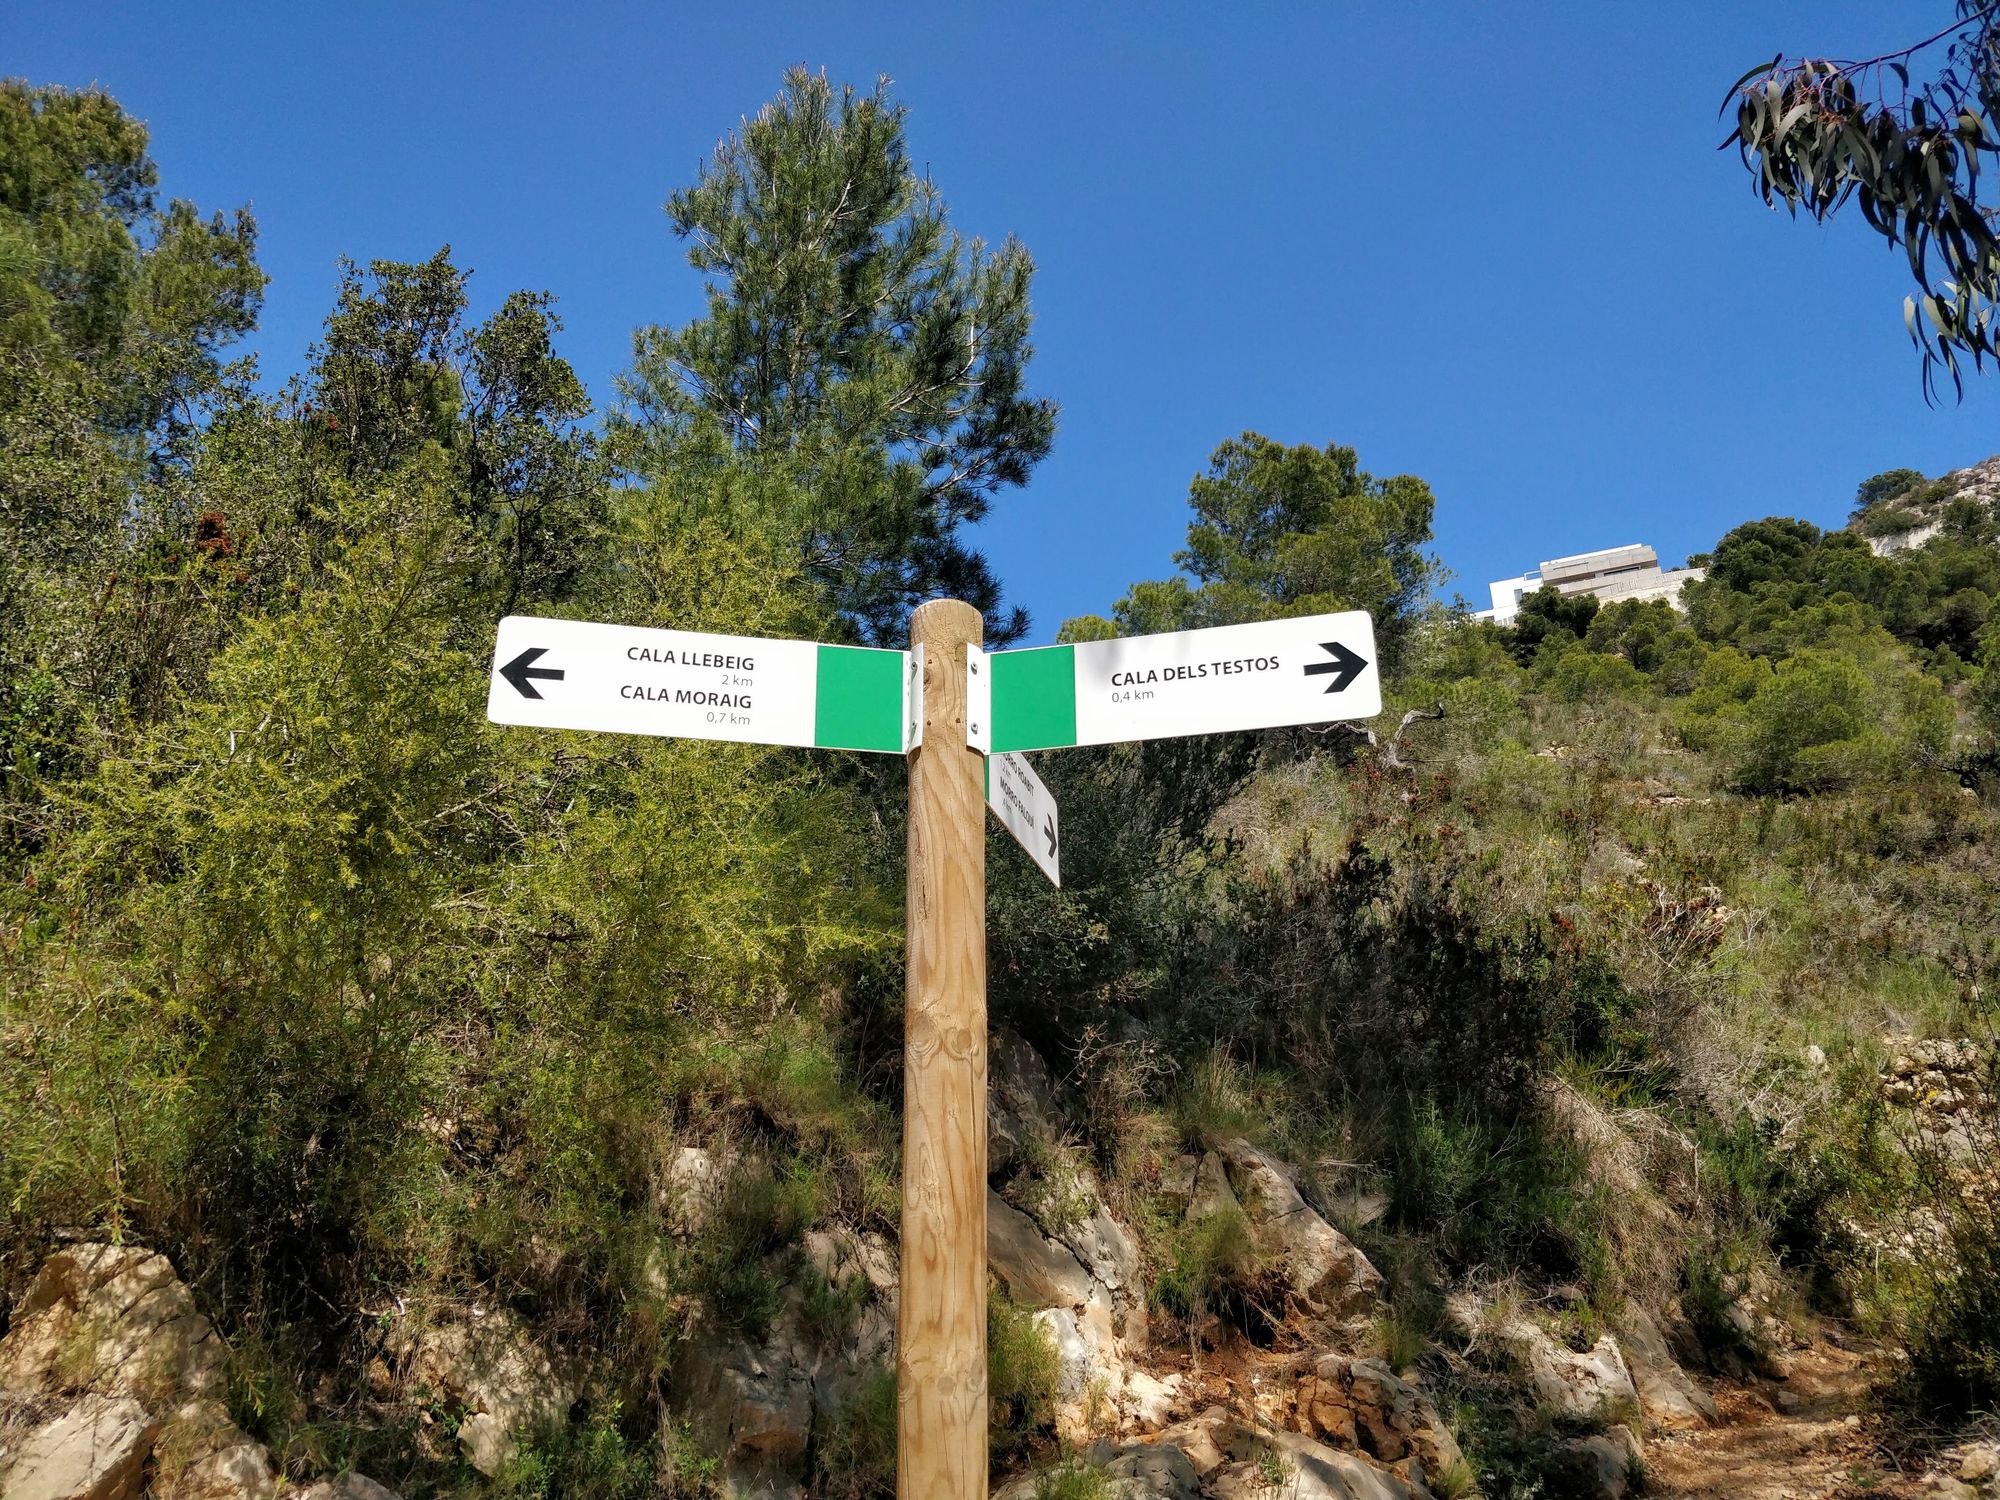 Trei golfuri albastre într-o zi: Cala Llebeig, Cala del Moraig și Cala de los Testos (Apr 2021)